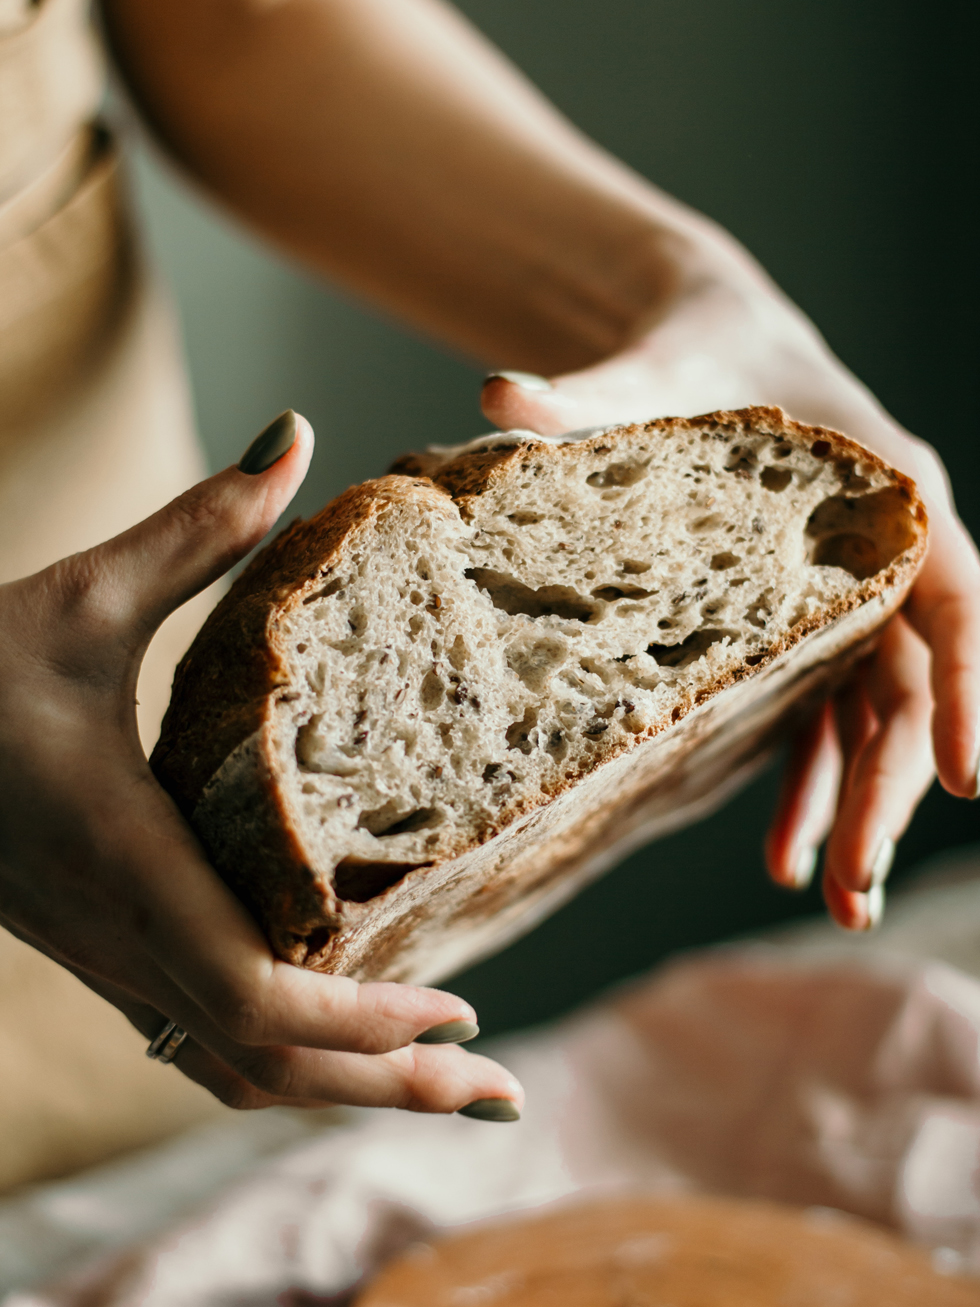 The Personalized Diet Sourdough Bread Image by Marta Dzedyshko from Pexels